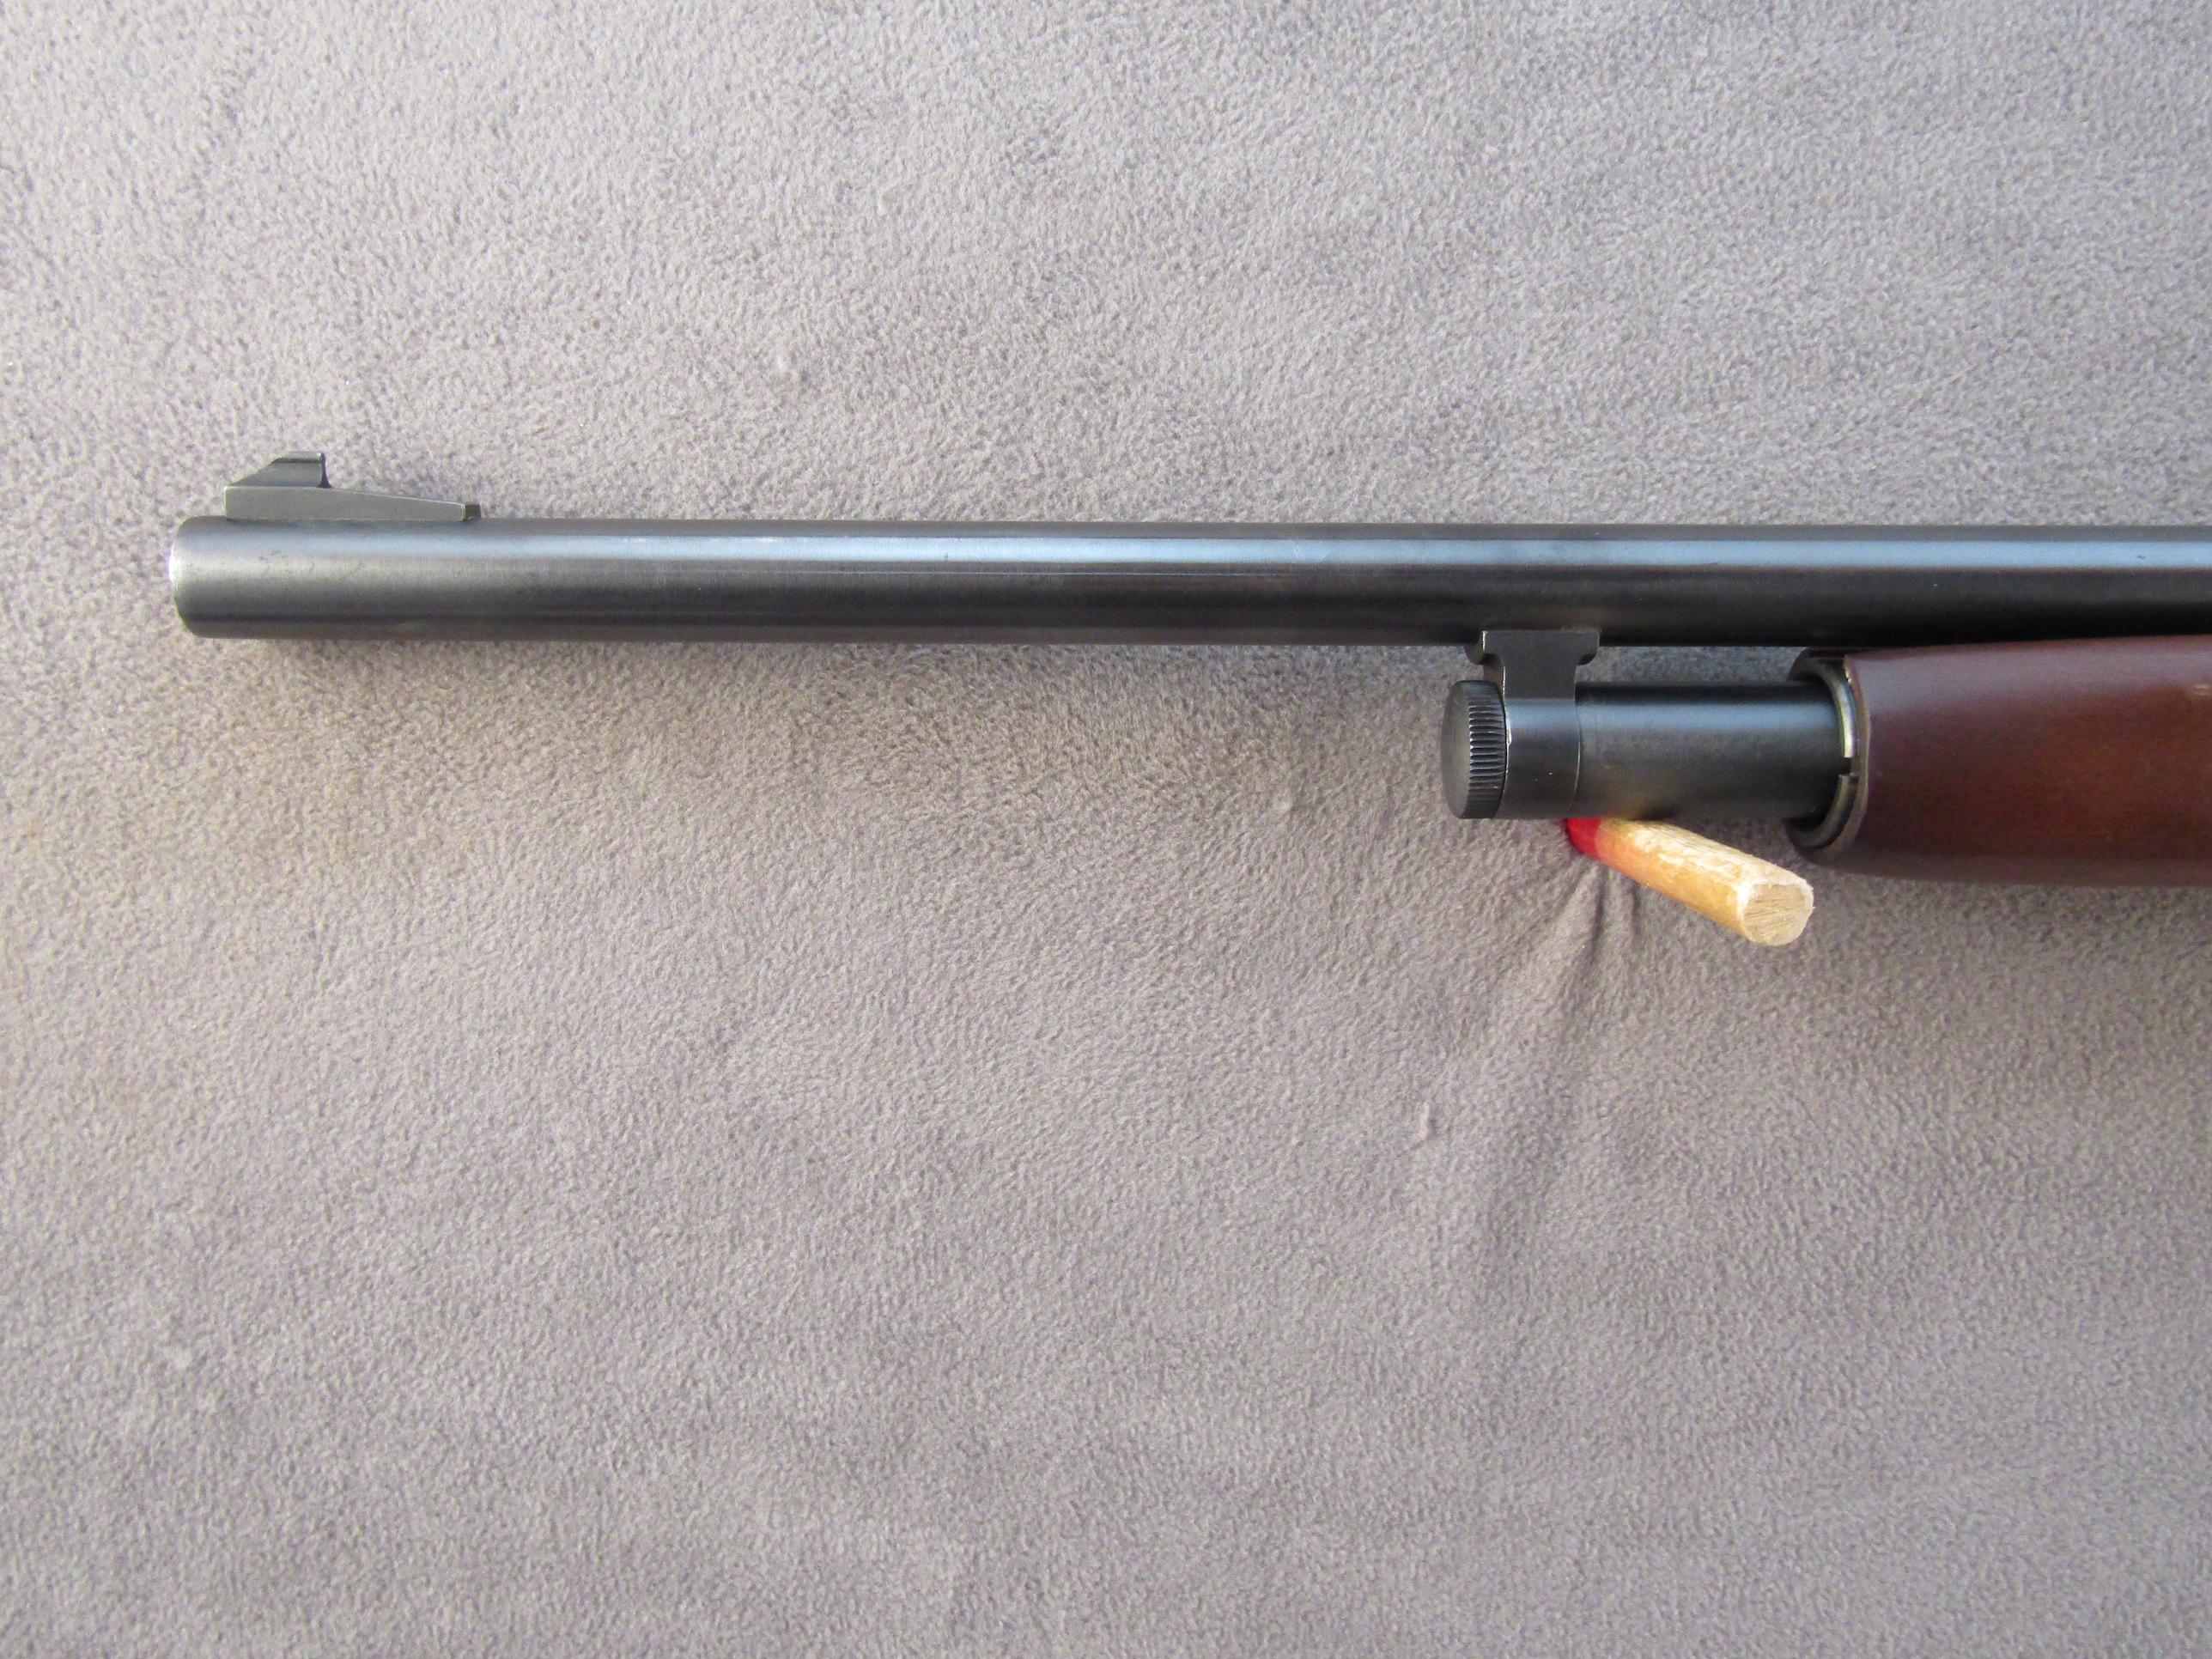 MOSSBERG Model 500A, Pump-Action Shotgun, 12g, S#J341458